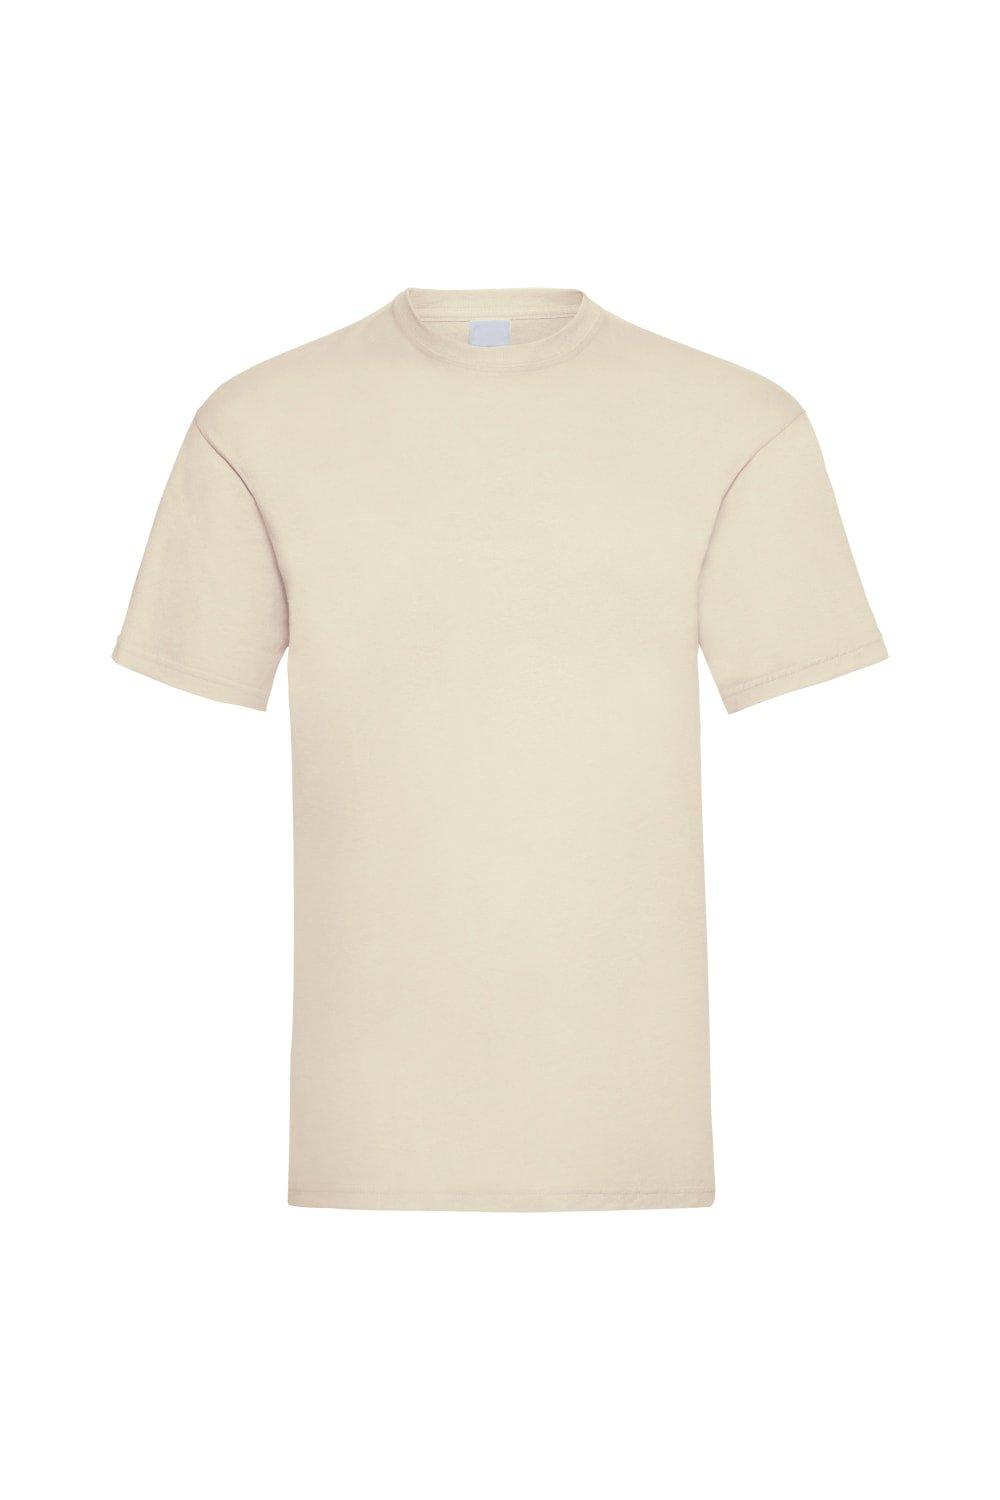 Повседневная футболка Value с короткими рукавами Universal Textiles, бежевый футболка мужская котмаркот серый меланж